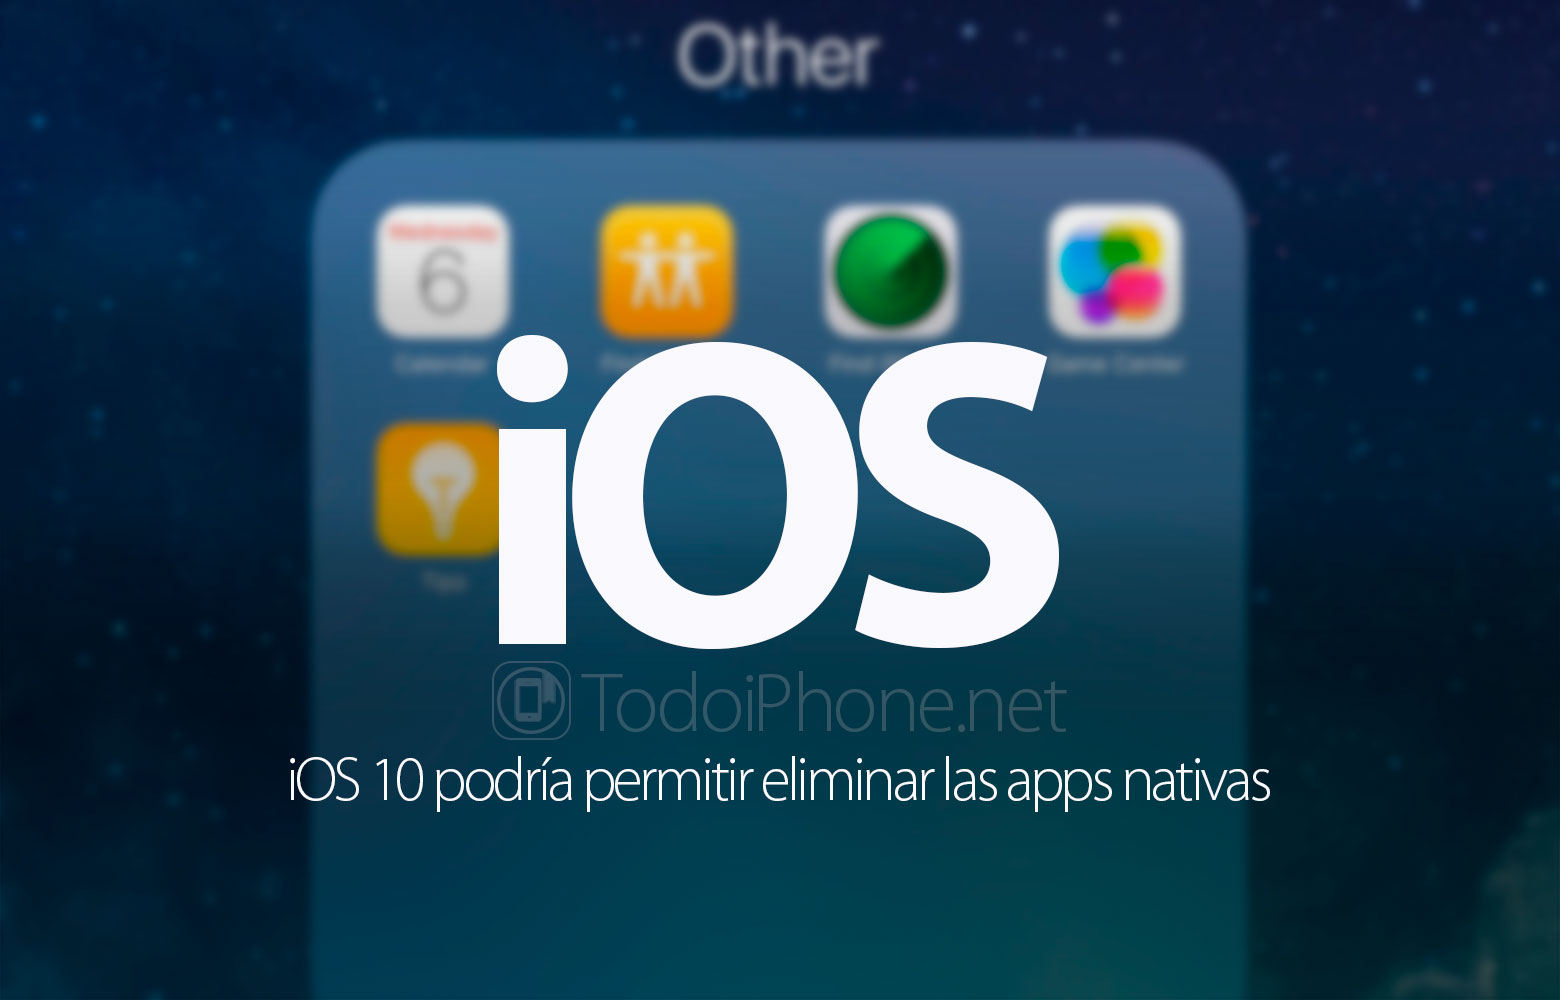 ios-10-podria-borrar-apps-nativas